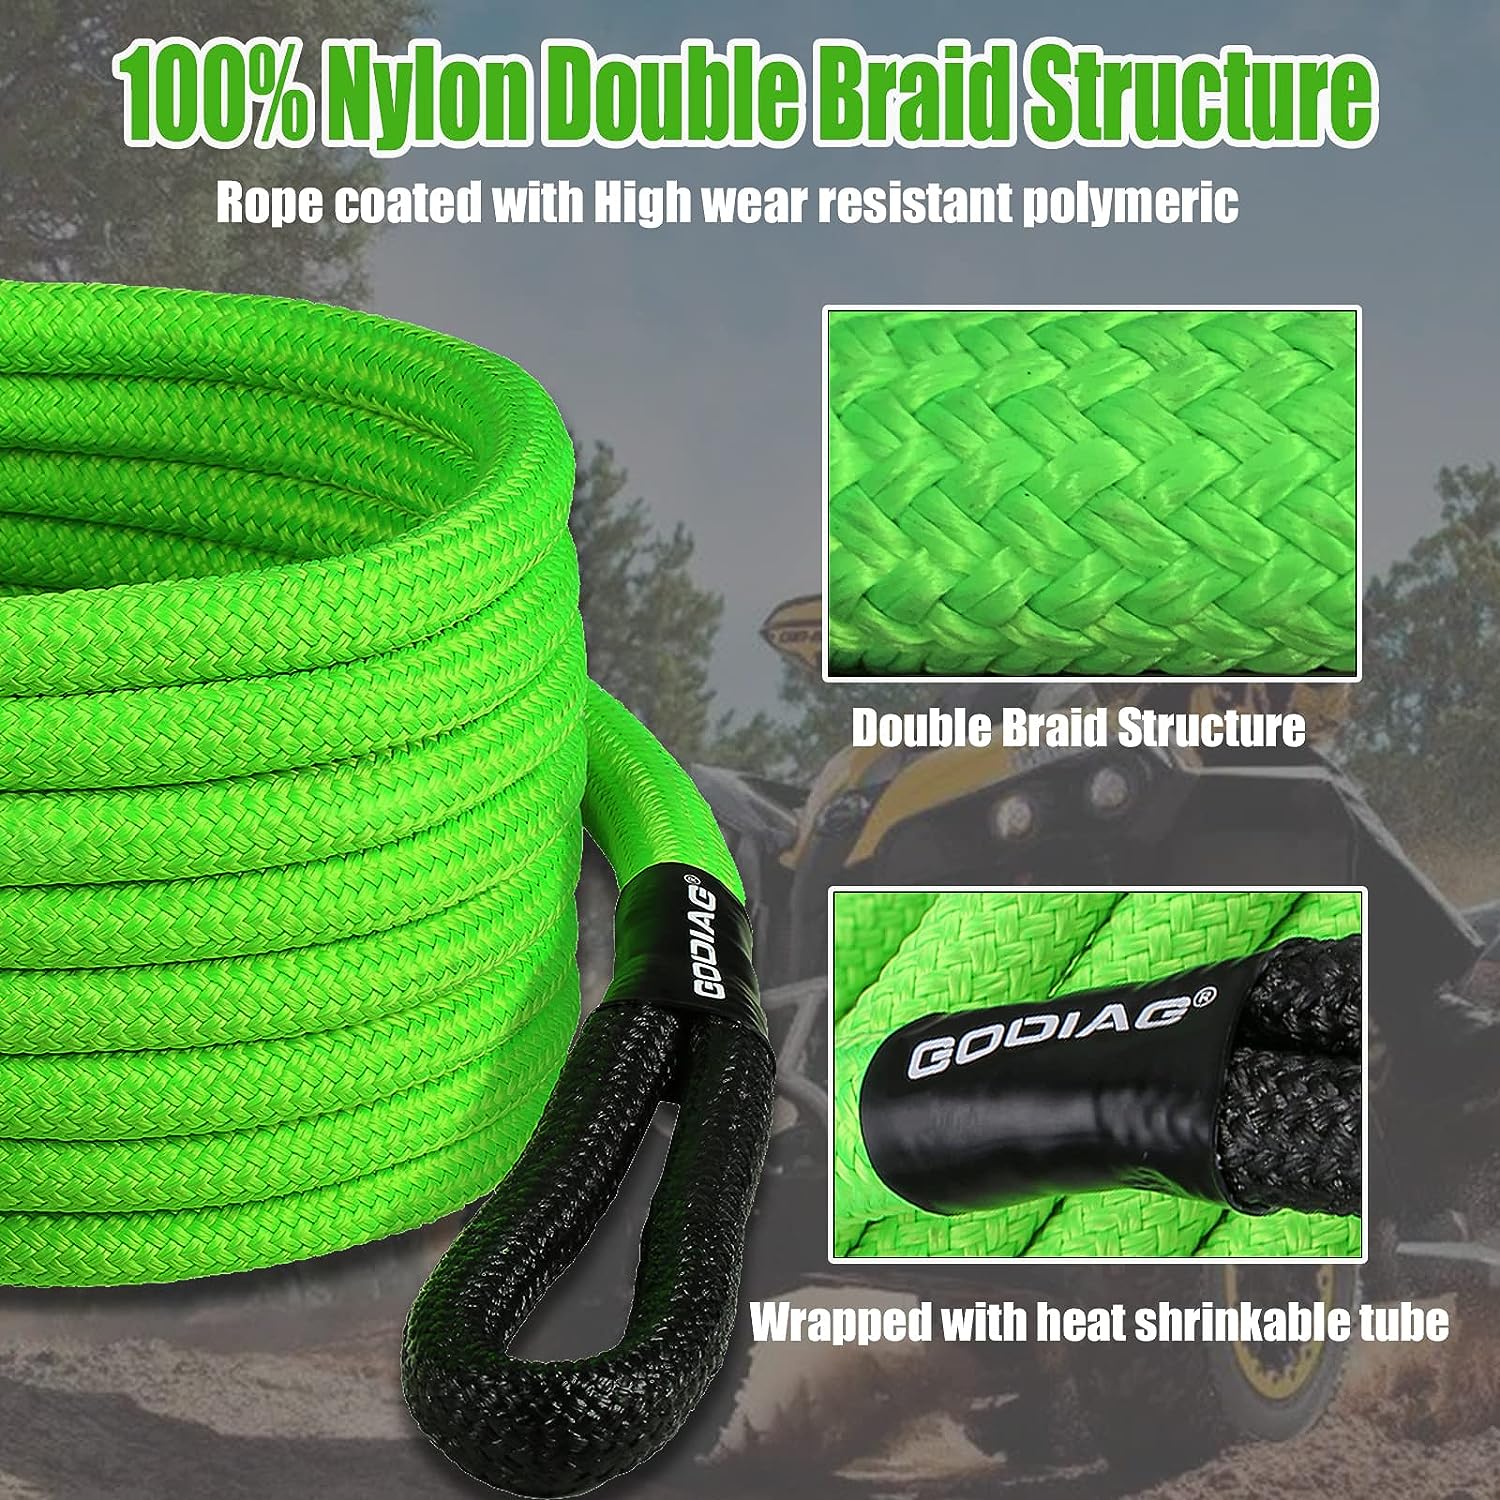 godiag-tow-rope-100%-nylon-double-braid-structure